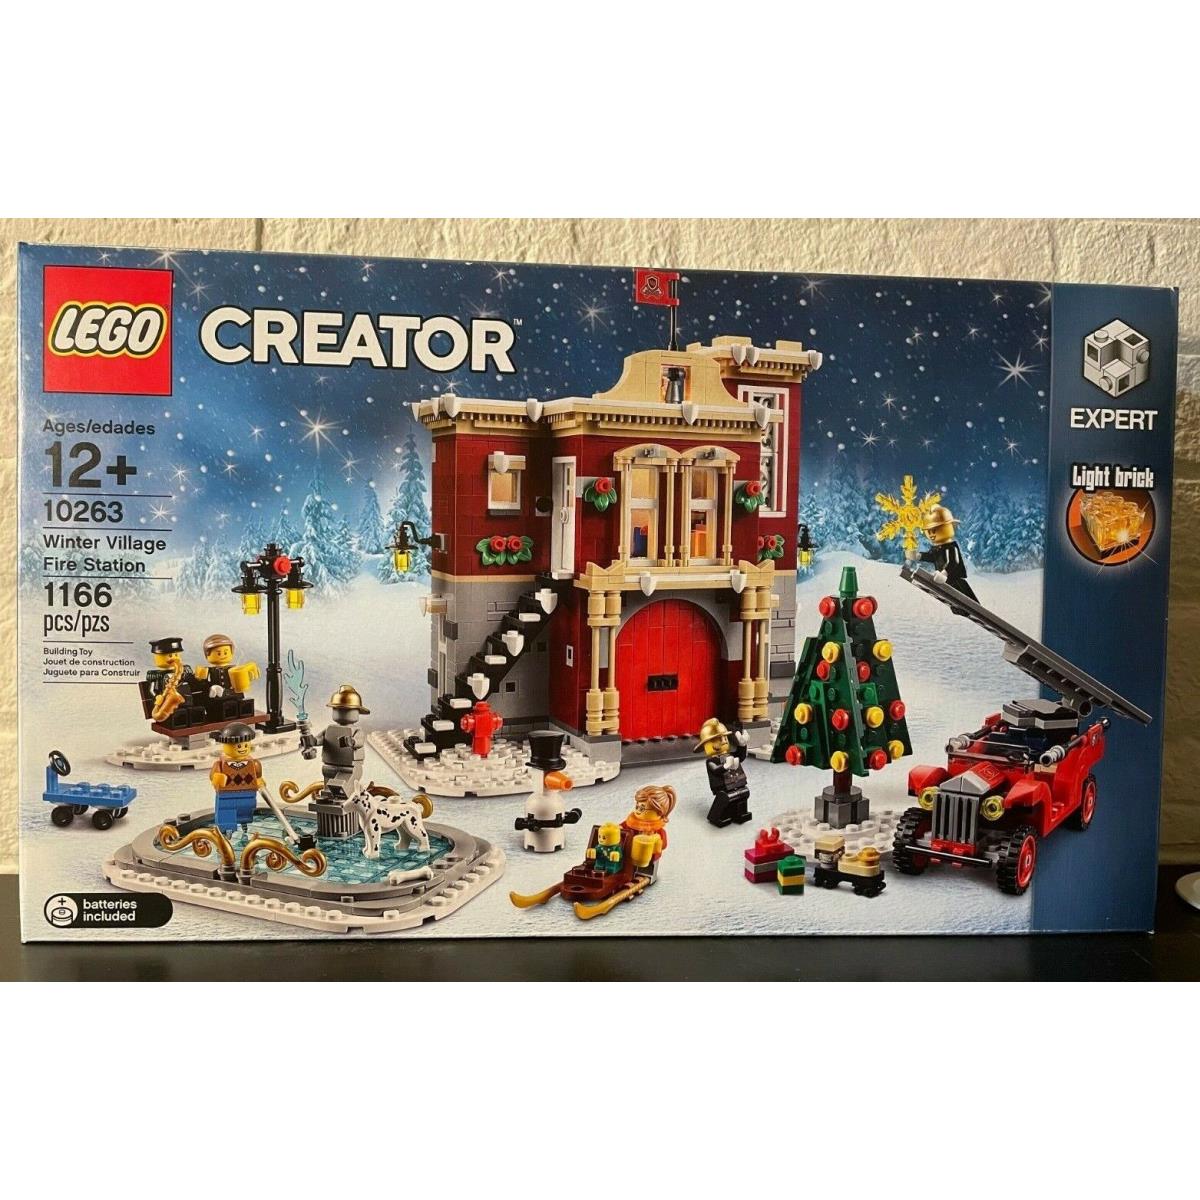 Lego Creator Winter Village Fire Station 10263 Building Set